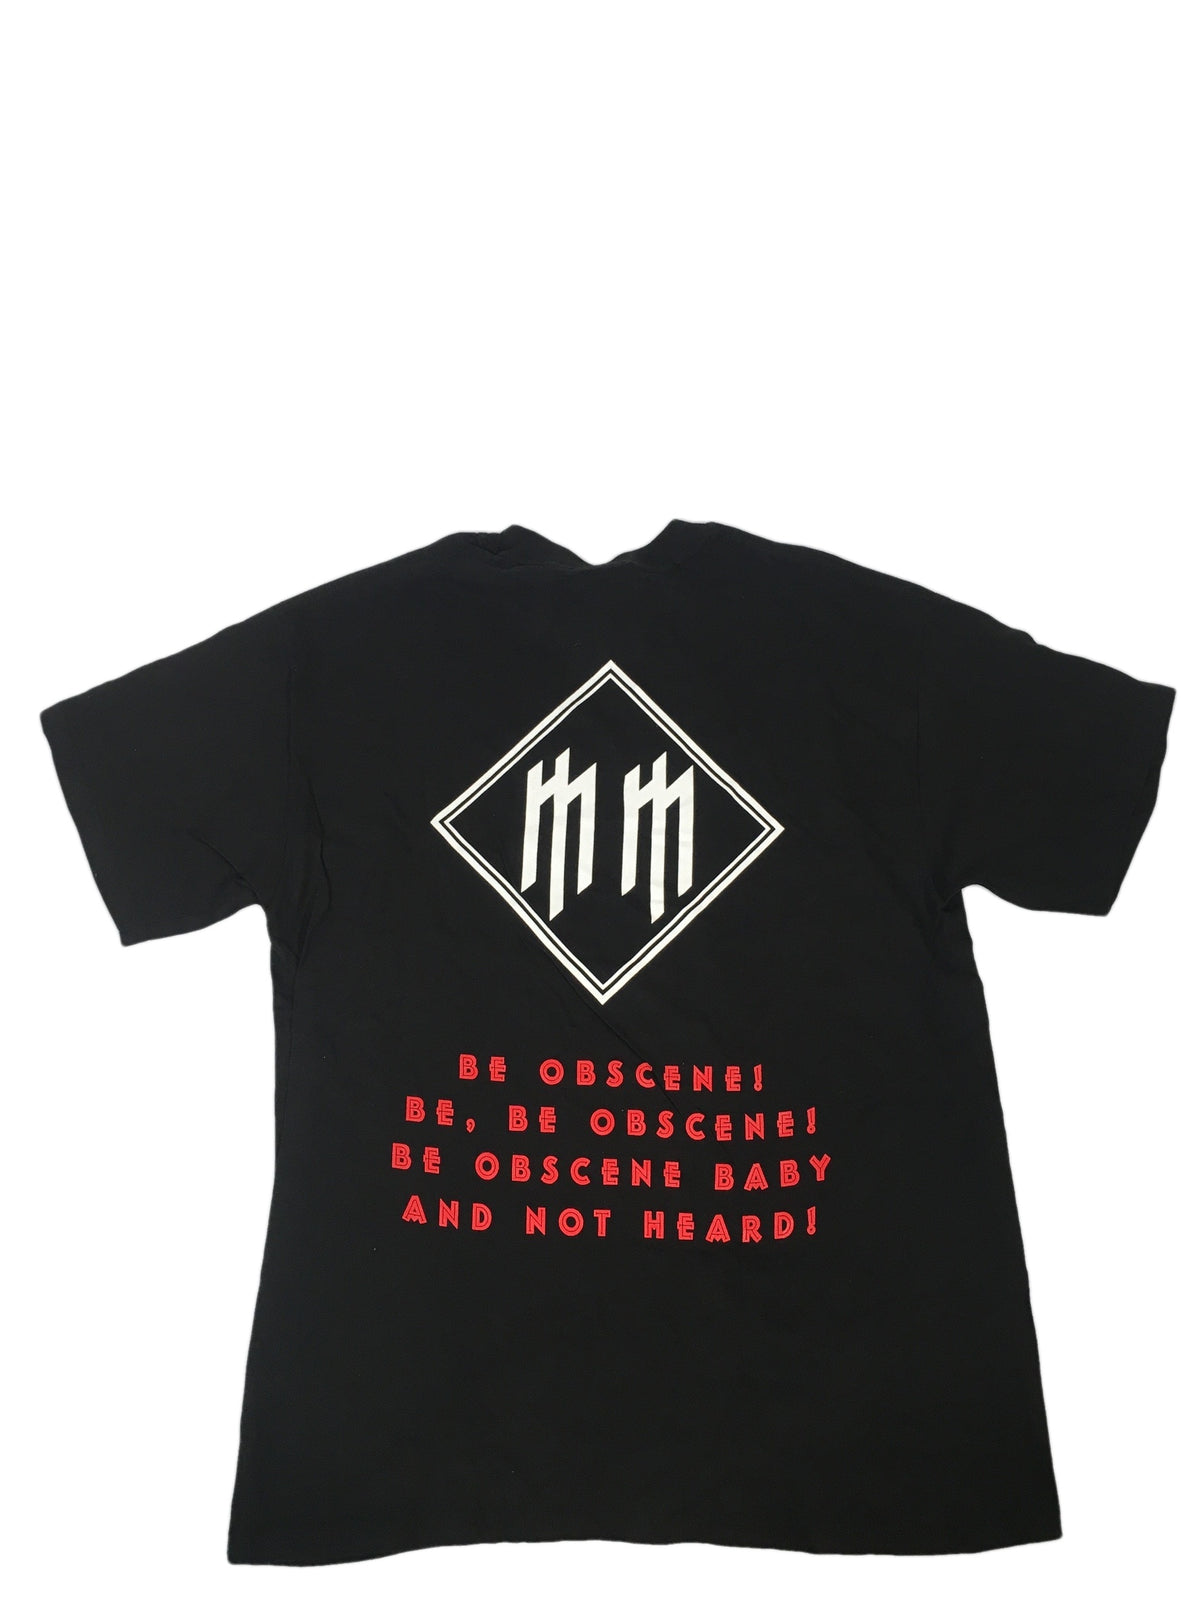 Vintage Marilyn Manson &quot;Mobscene&quot; T-shirt - jointcustodydc